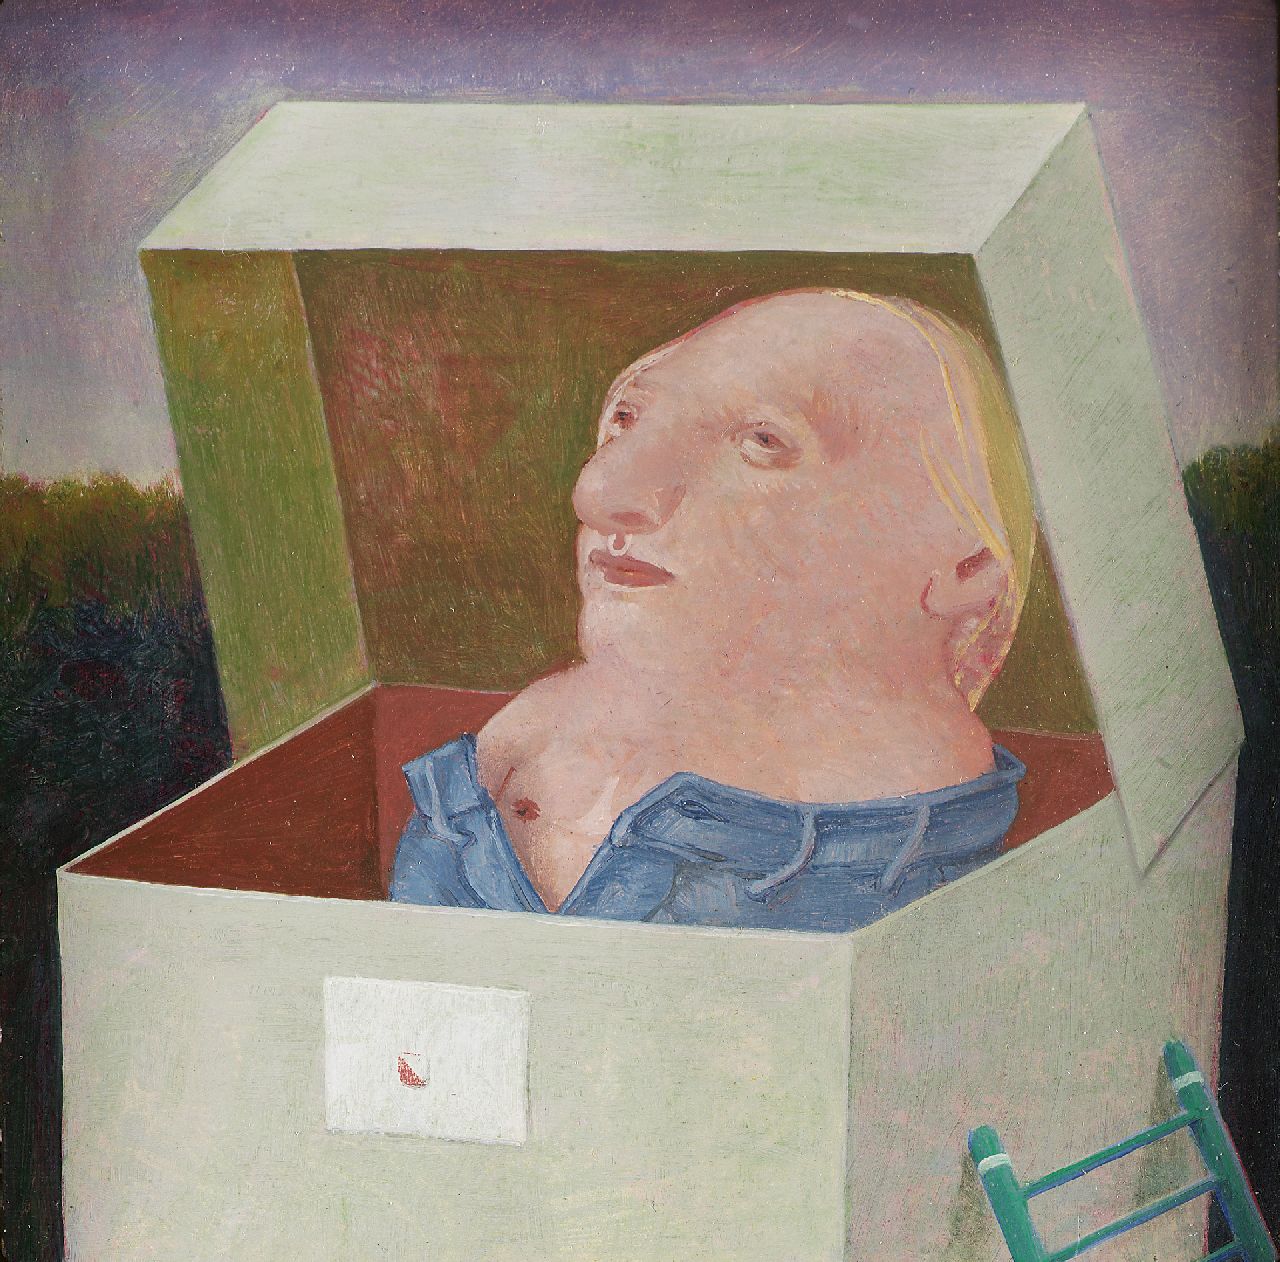 Poppel P.A.T. van | Petrus Antonius Theodorus 'Peter' van Poppel, Figure in a box, Öl auf Papier auf Holz 10,0 x 10,0 cm, signed on the reverse und dated 1972 on the reverse